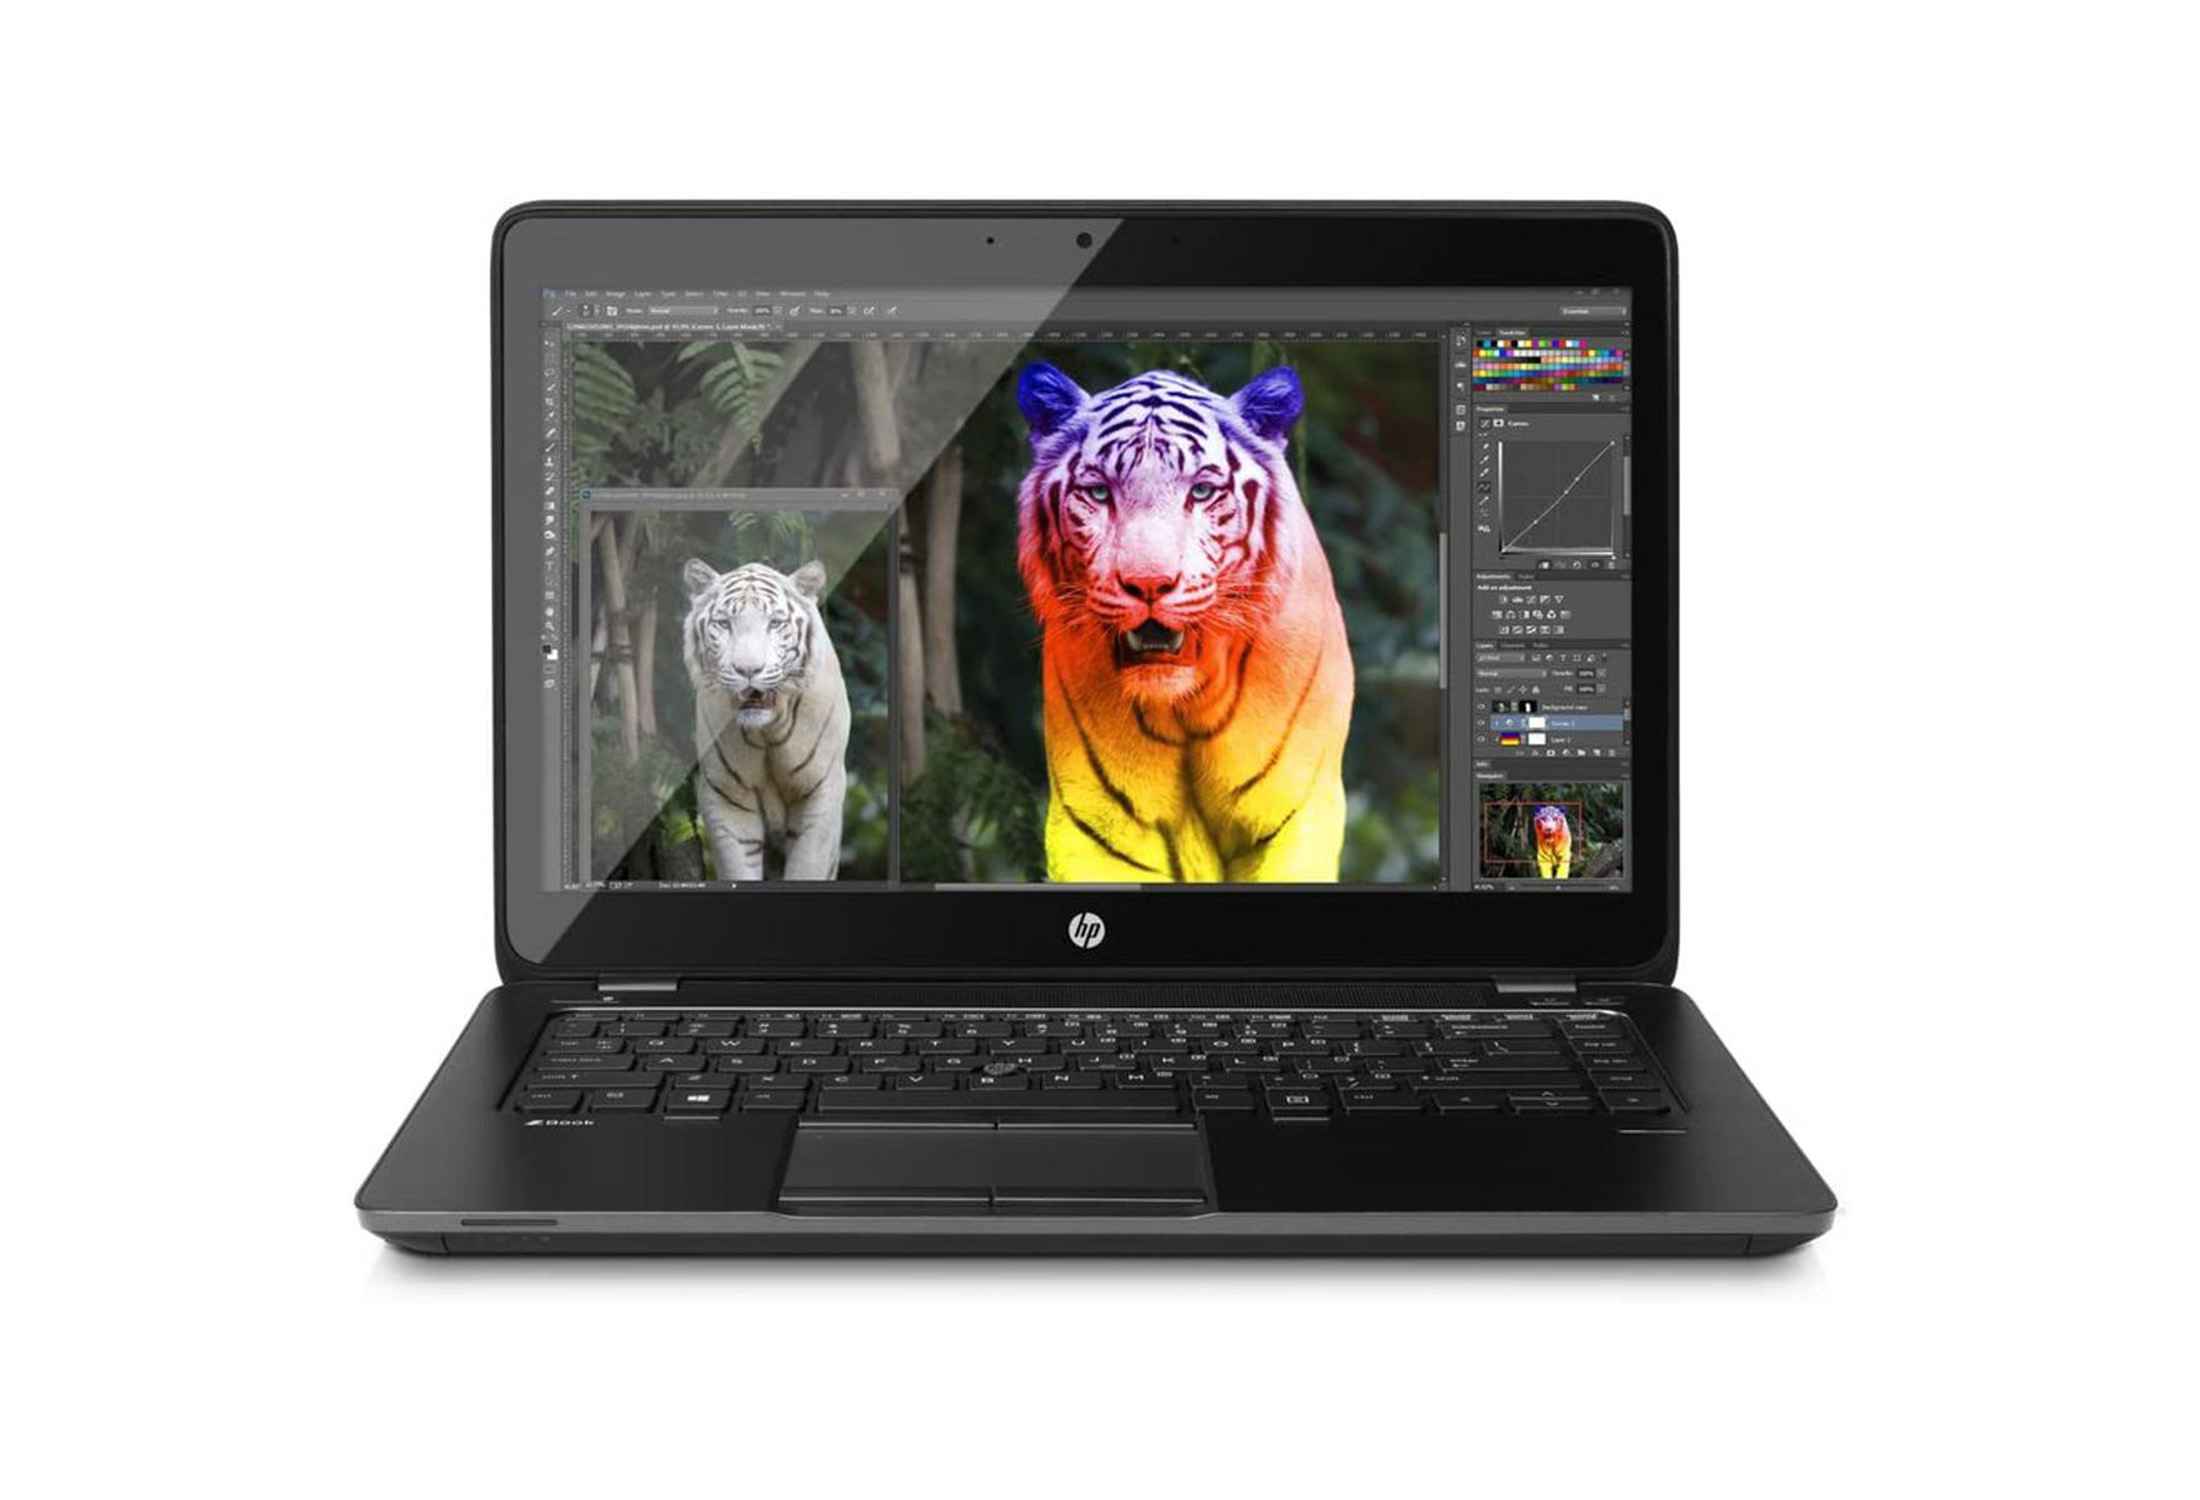 HP ZBook 14 i7-4600U FHD IPS AMD FirePro SSD Camera